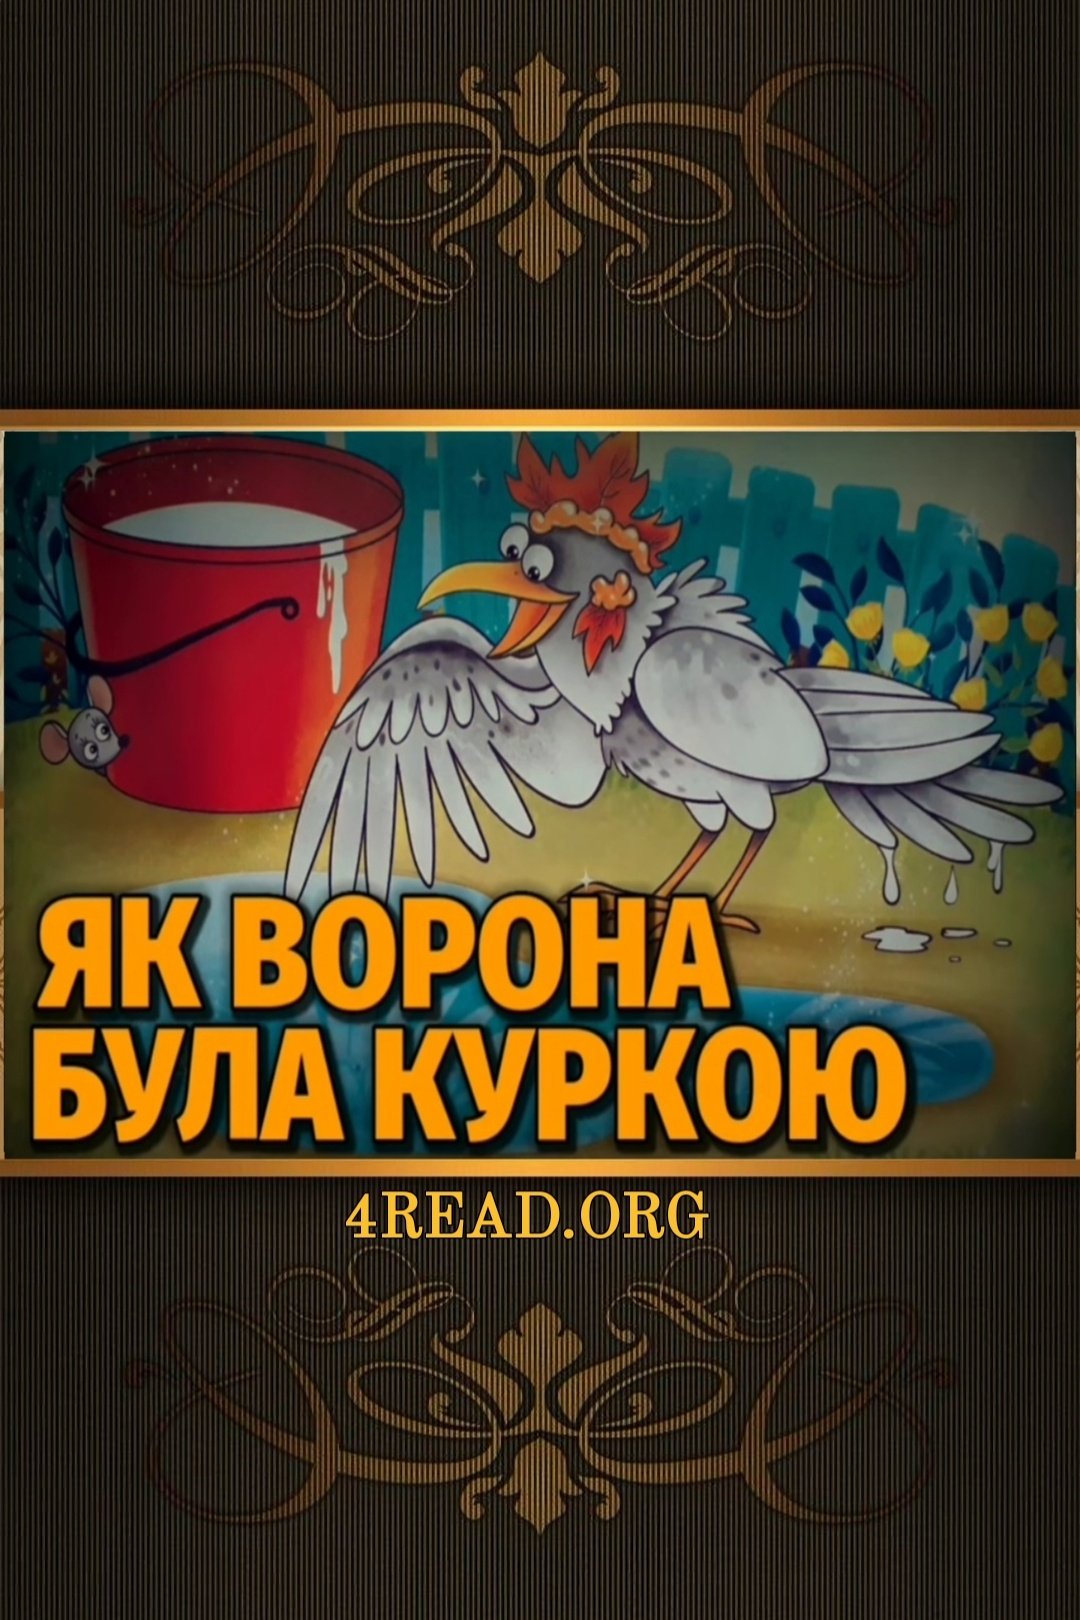 Як Ворона була куркою - Undefined - Слухати Книги Українською Онлайн Безкоштовно 📘 Knigi-Audio.com/uk/